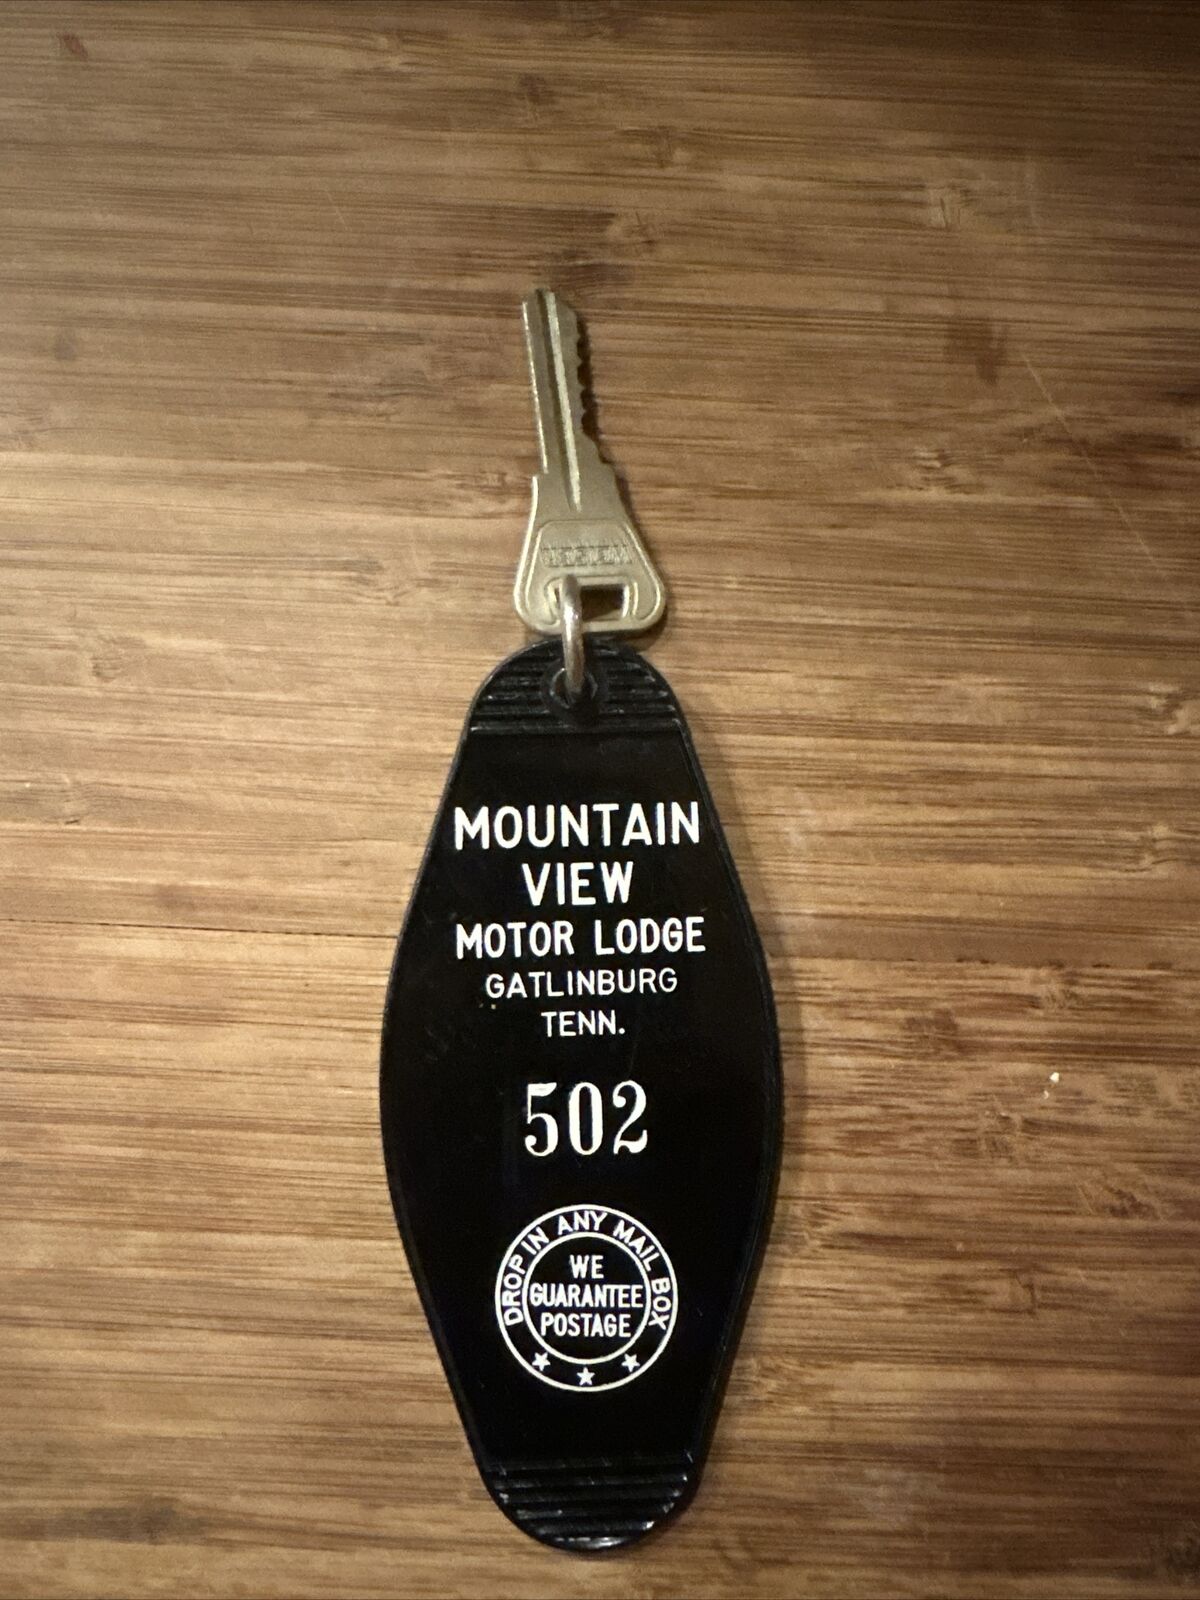 MOUNTAIN VIEW MOTOR LODGE Motel Hotel Room Key Fob & Key Gatlinburg TN #502 RARE